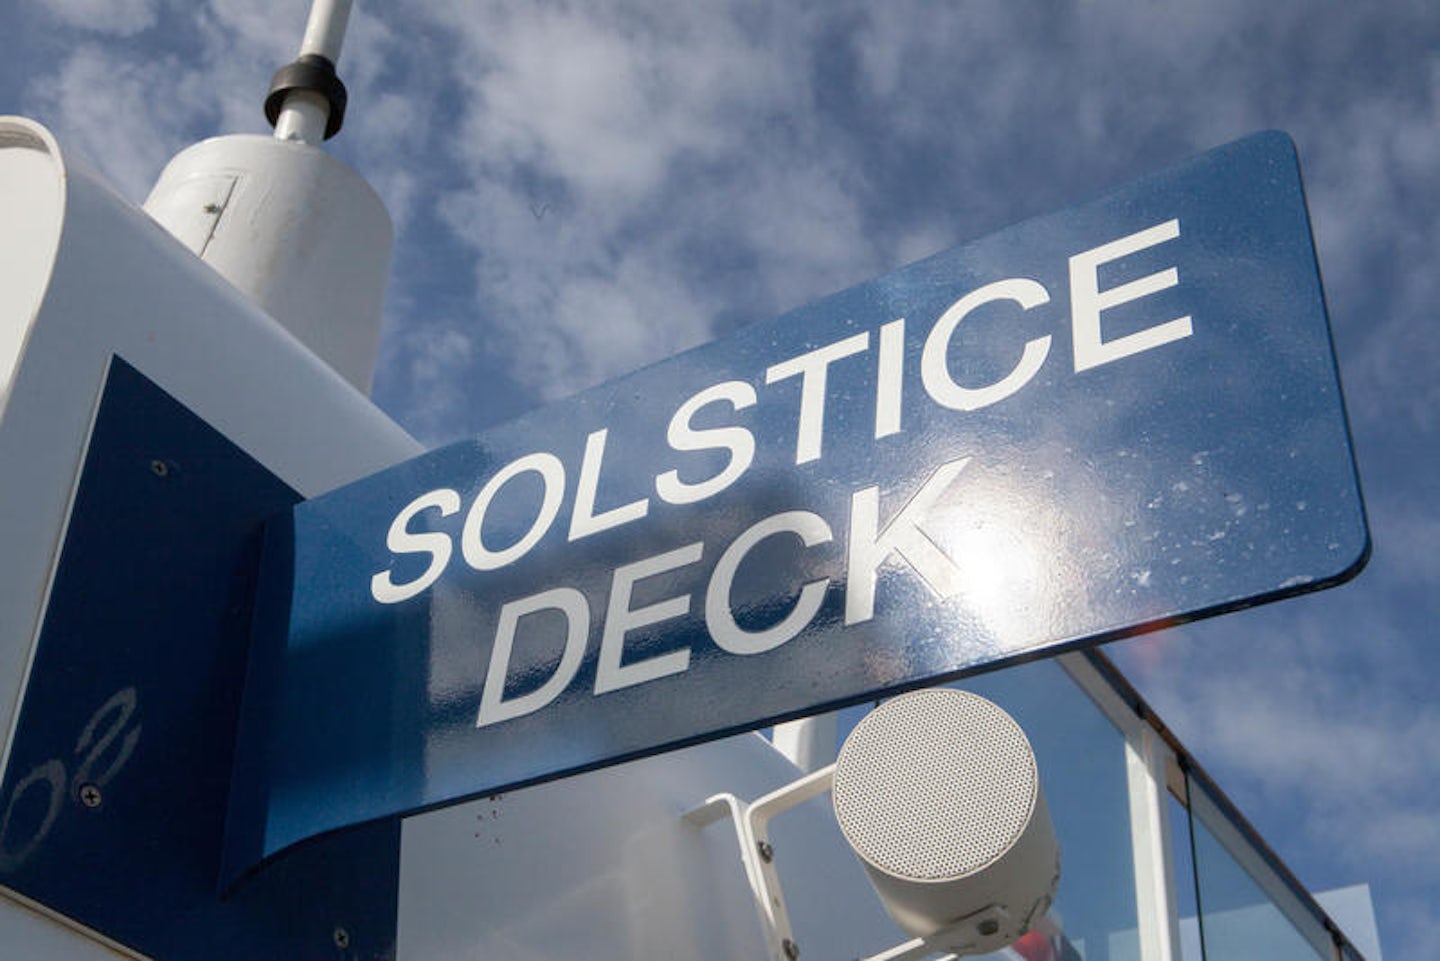 The Solstice Deck on Celebrity Eclipse